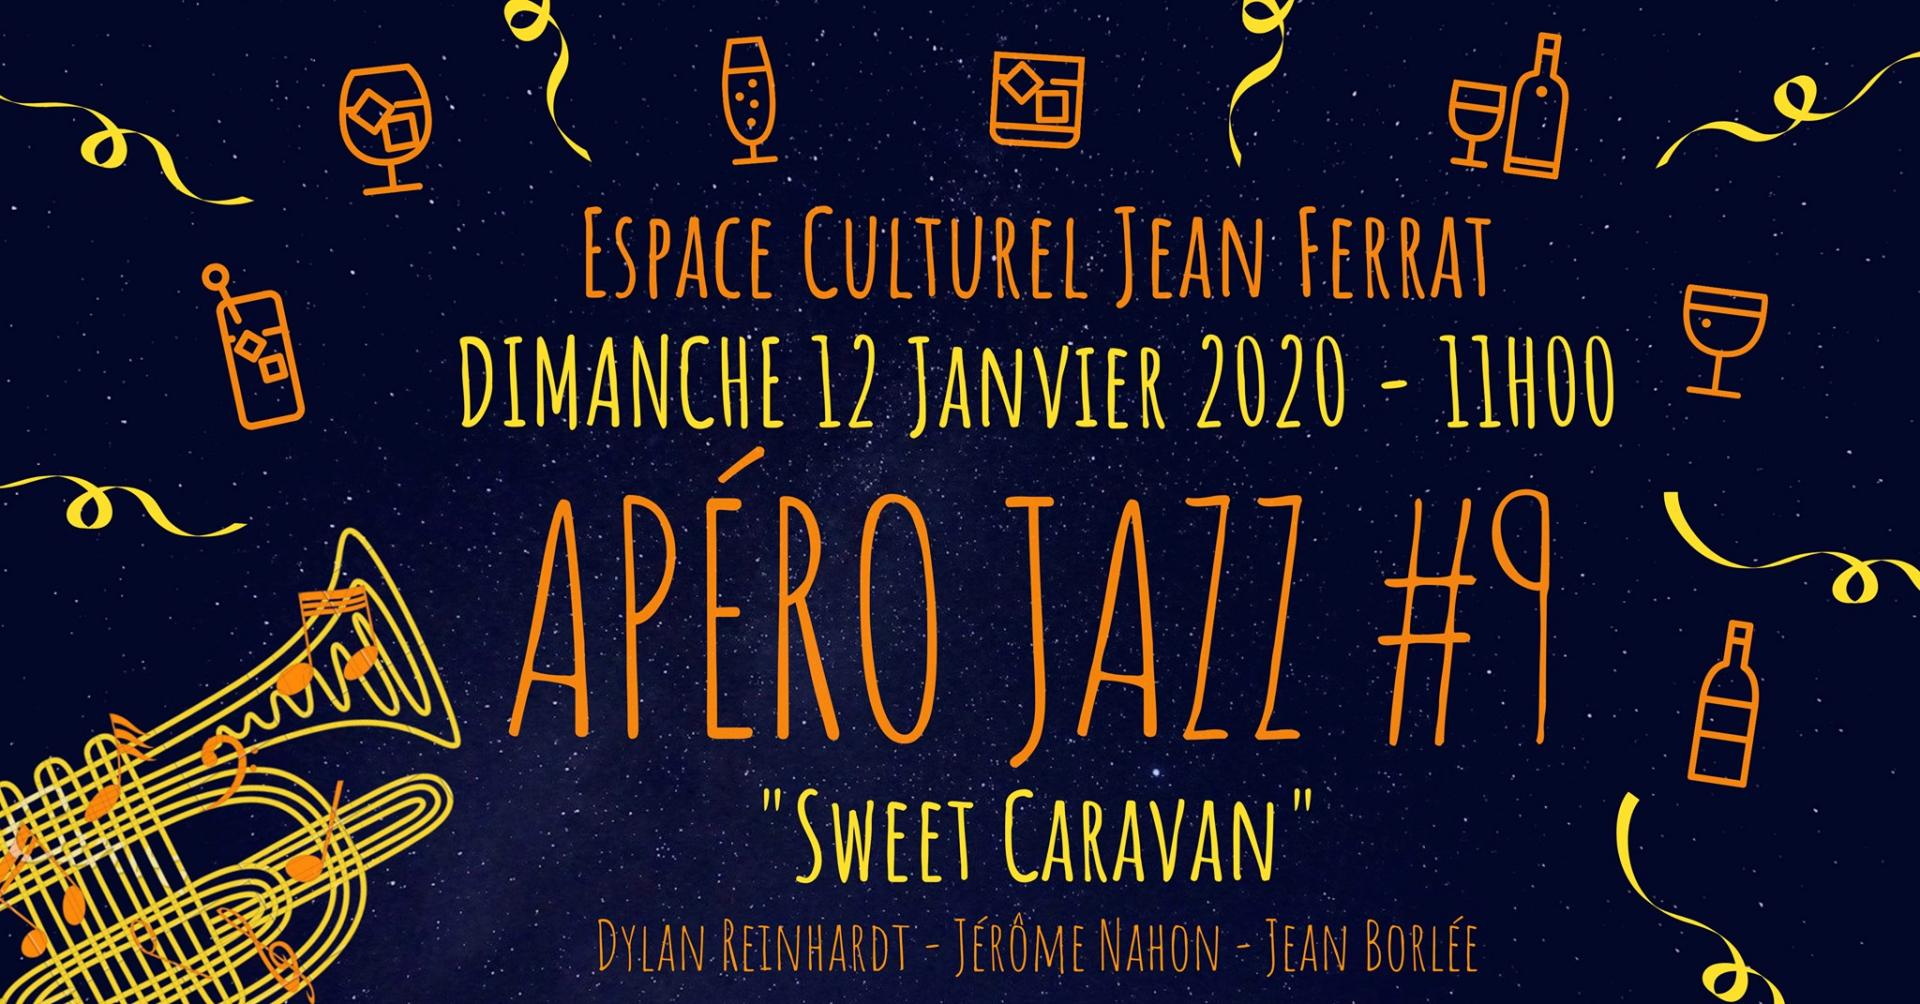 Apéro Jazz #9 - Sweet Caravan